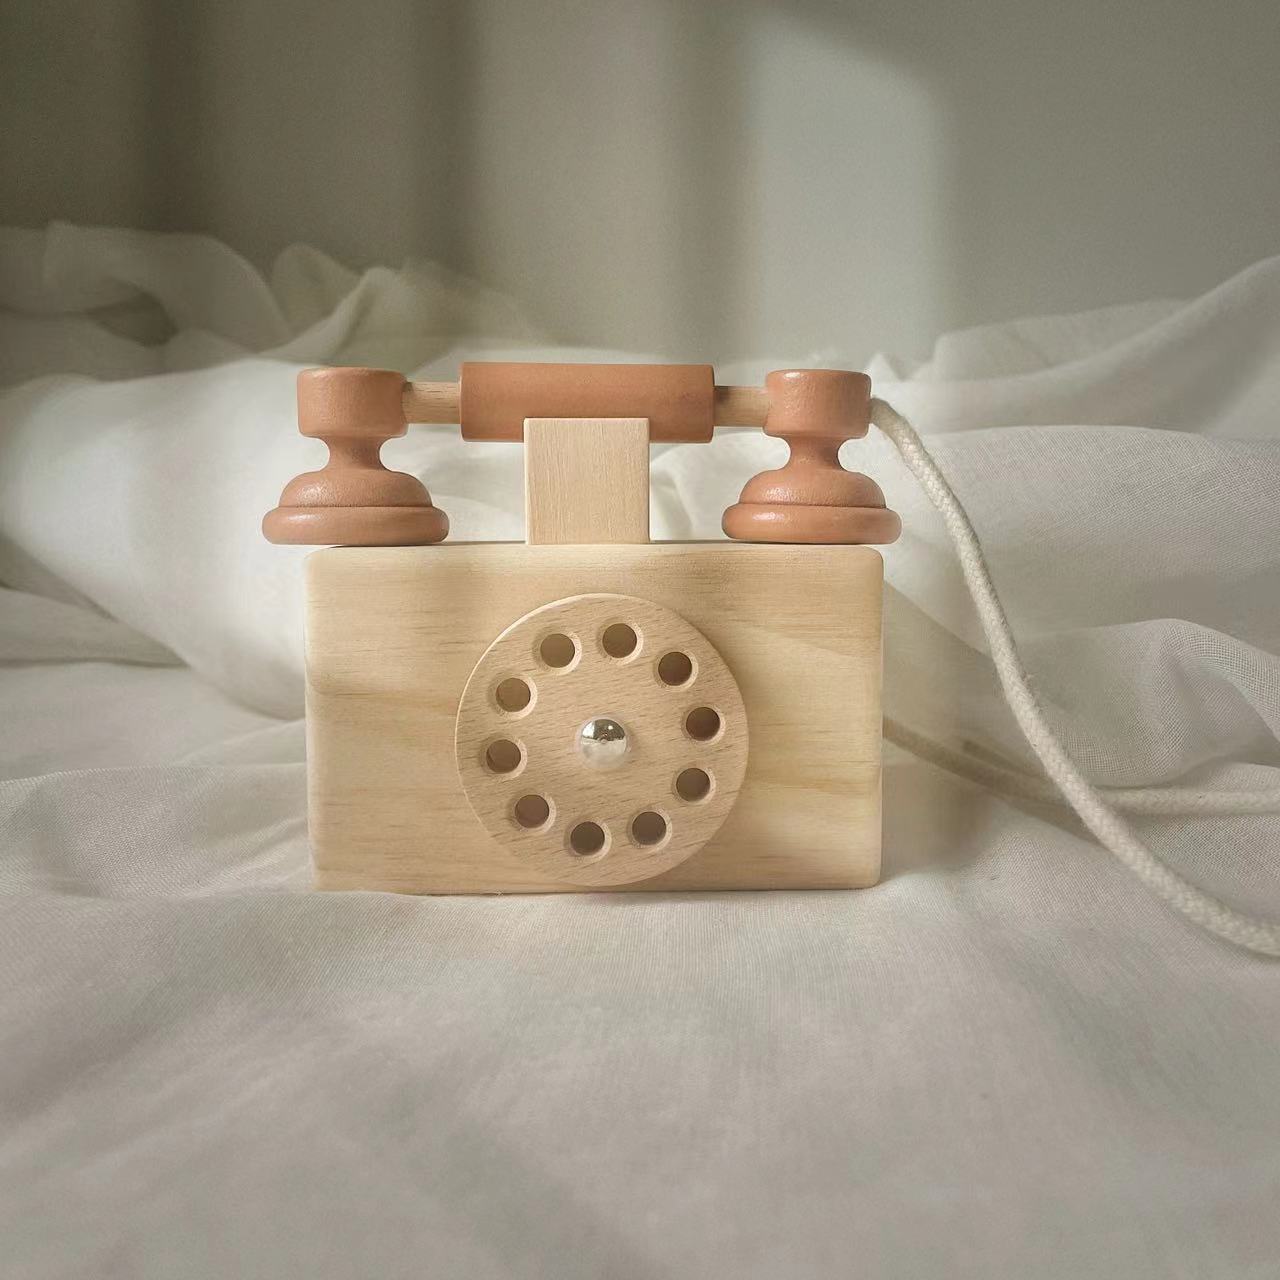 INS新作 大人気 木製 木質おもちゃ 電話機  子供用品  知育玩具  プレゼント 撮影用具